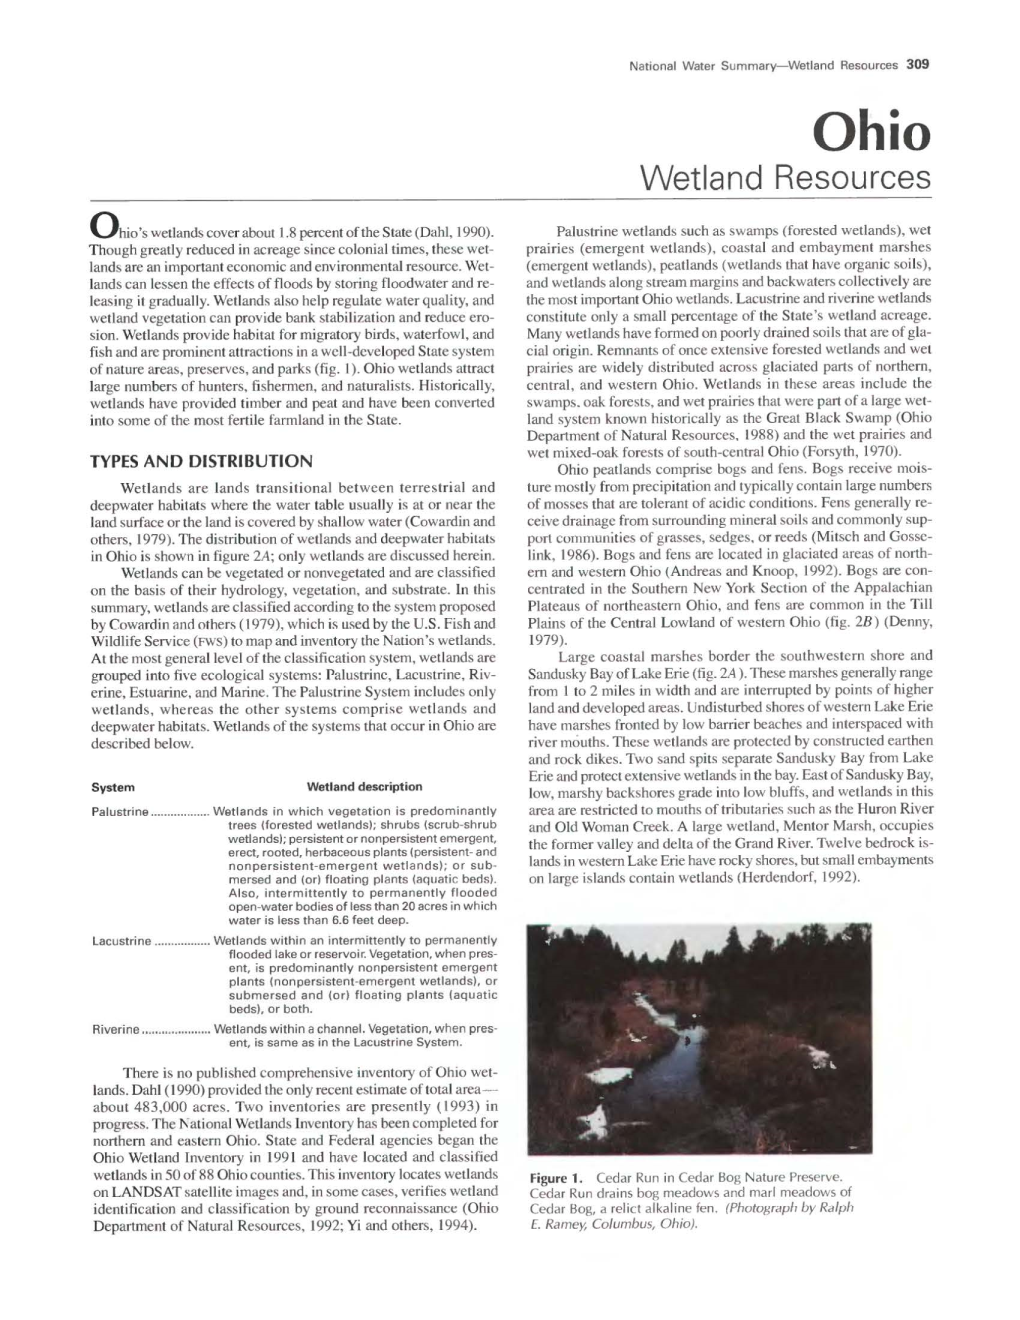 National Water Summary Wetland Resources: Ohio